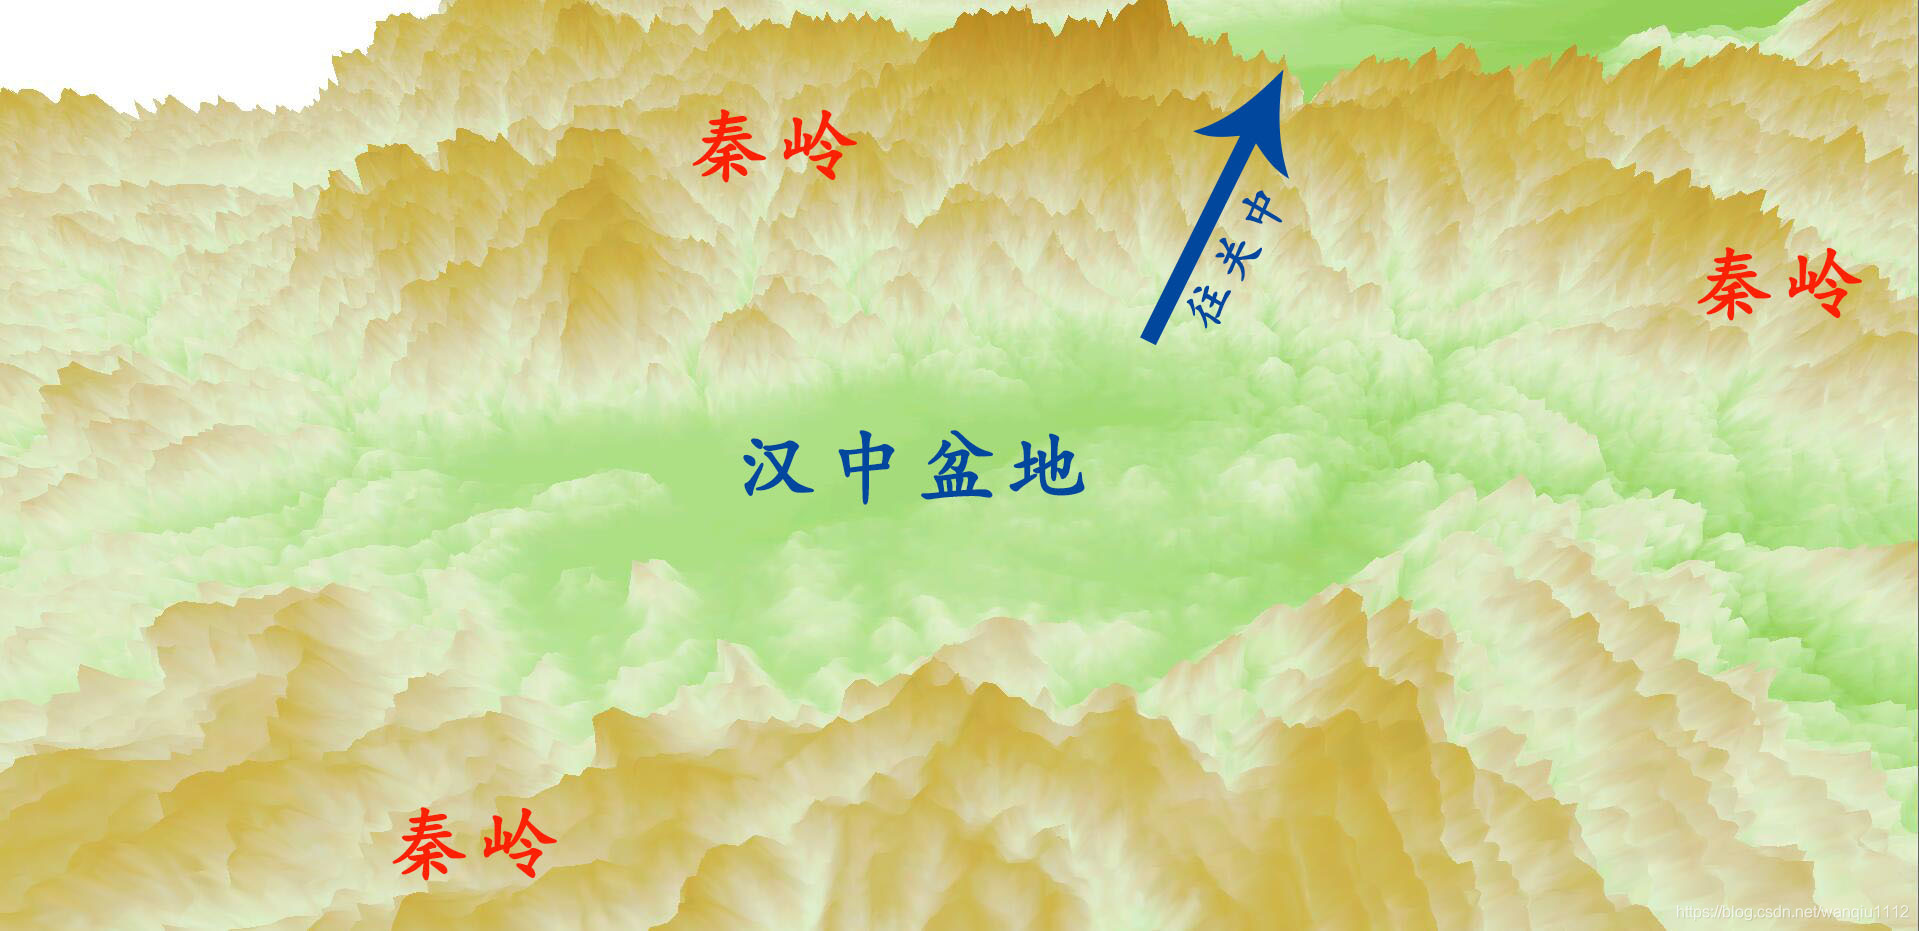 Schematic diagram of Qinlingyu Road